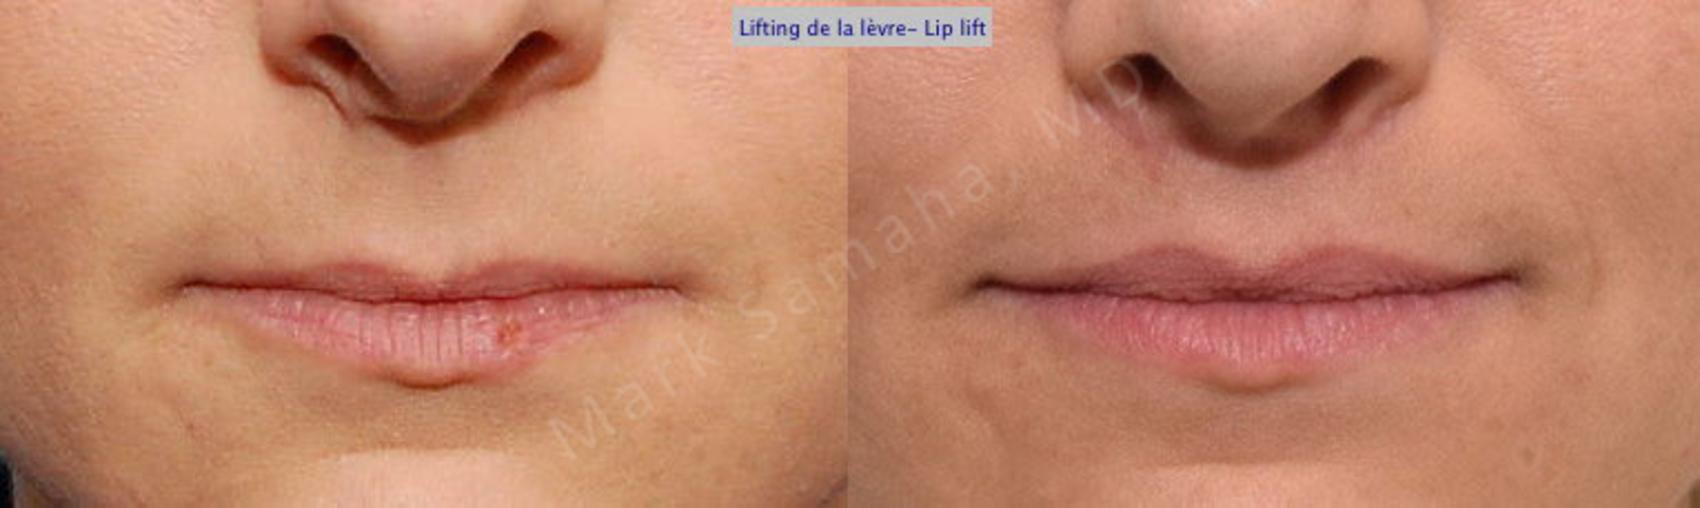 Before & After Lifting de la lèvre supérieure / Lip Lift  Case 25 View #1 View in Montreal, QC